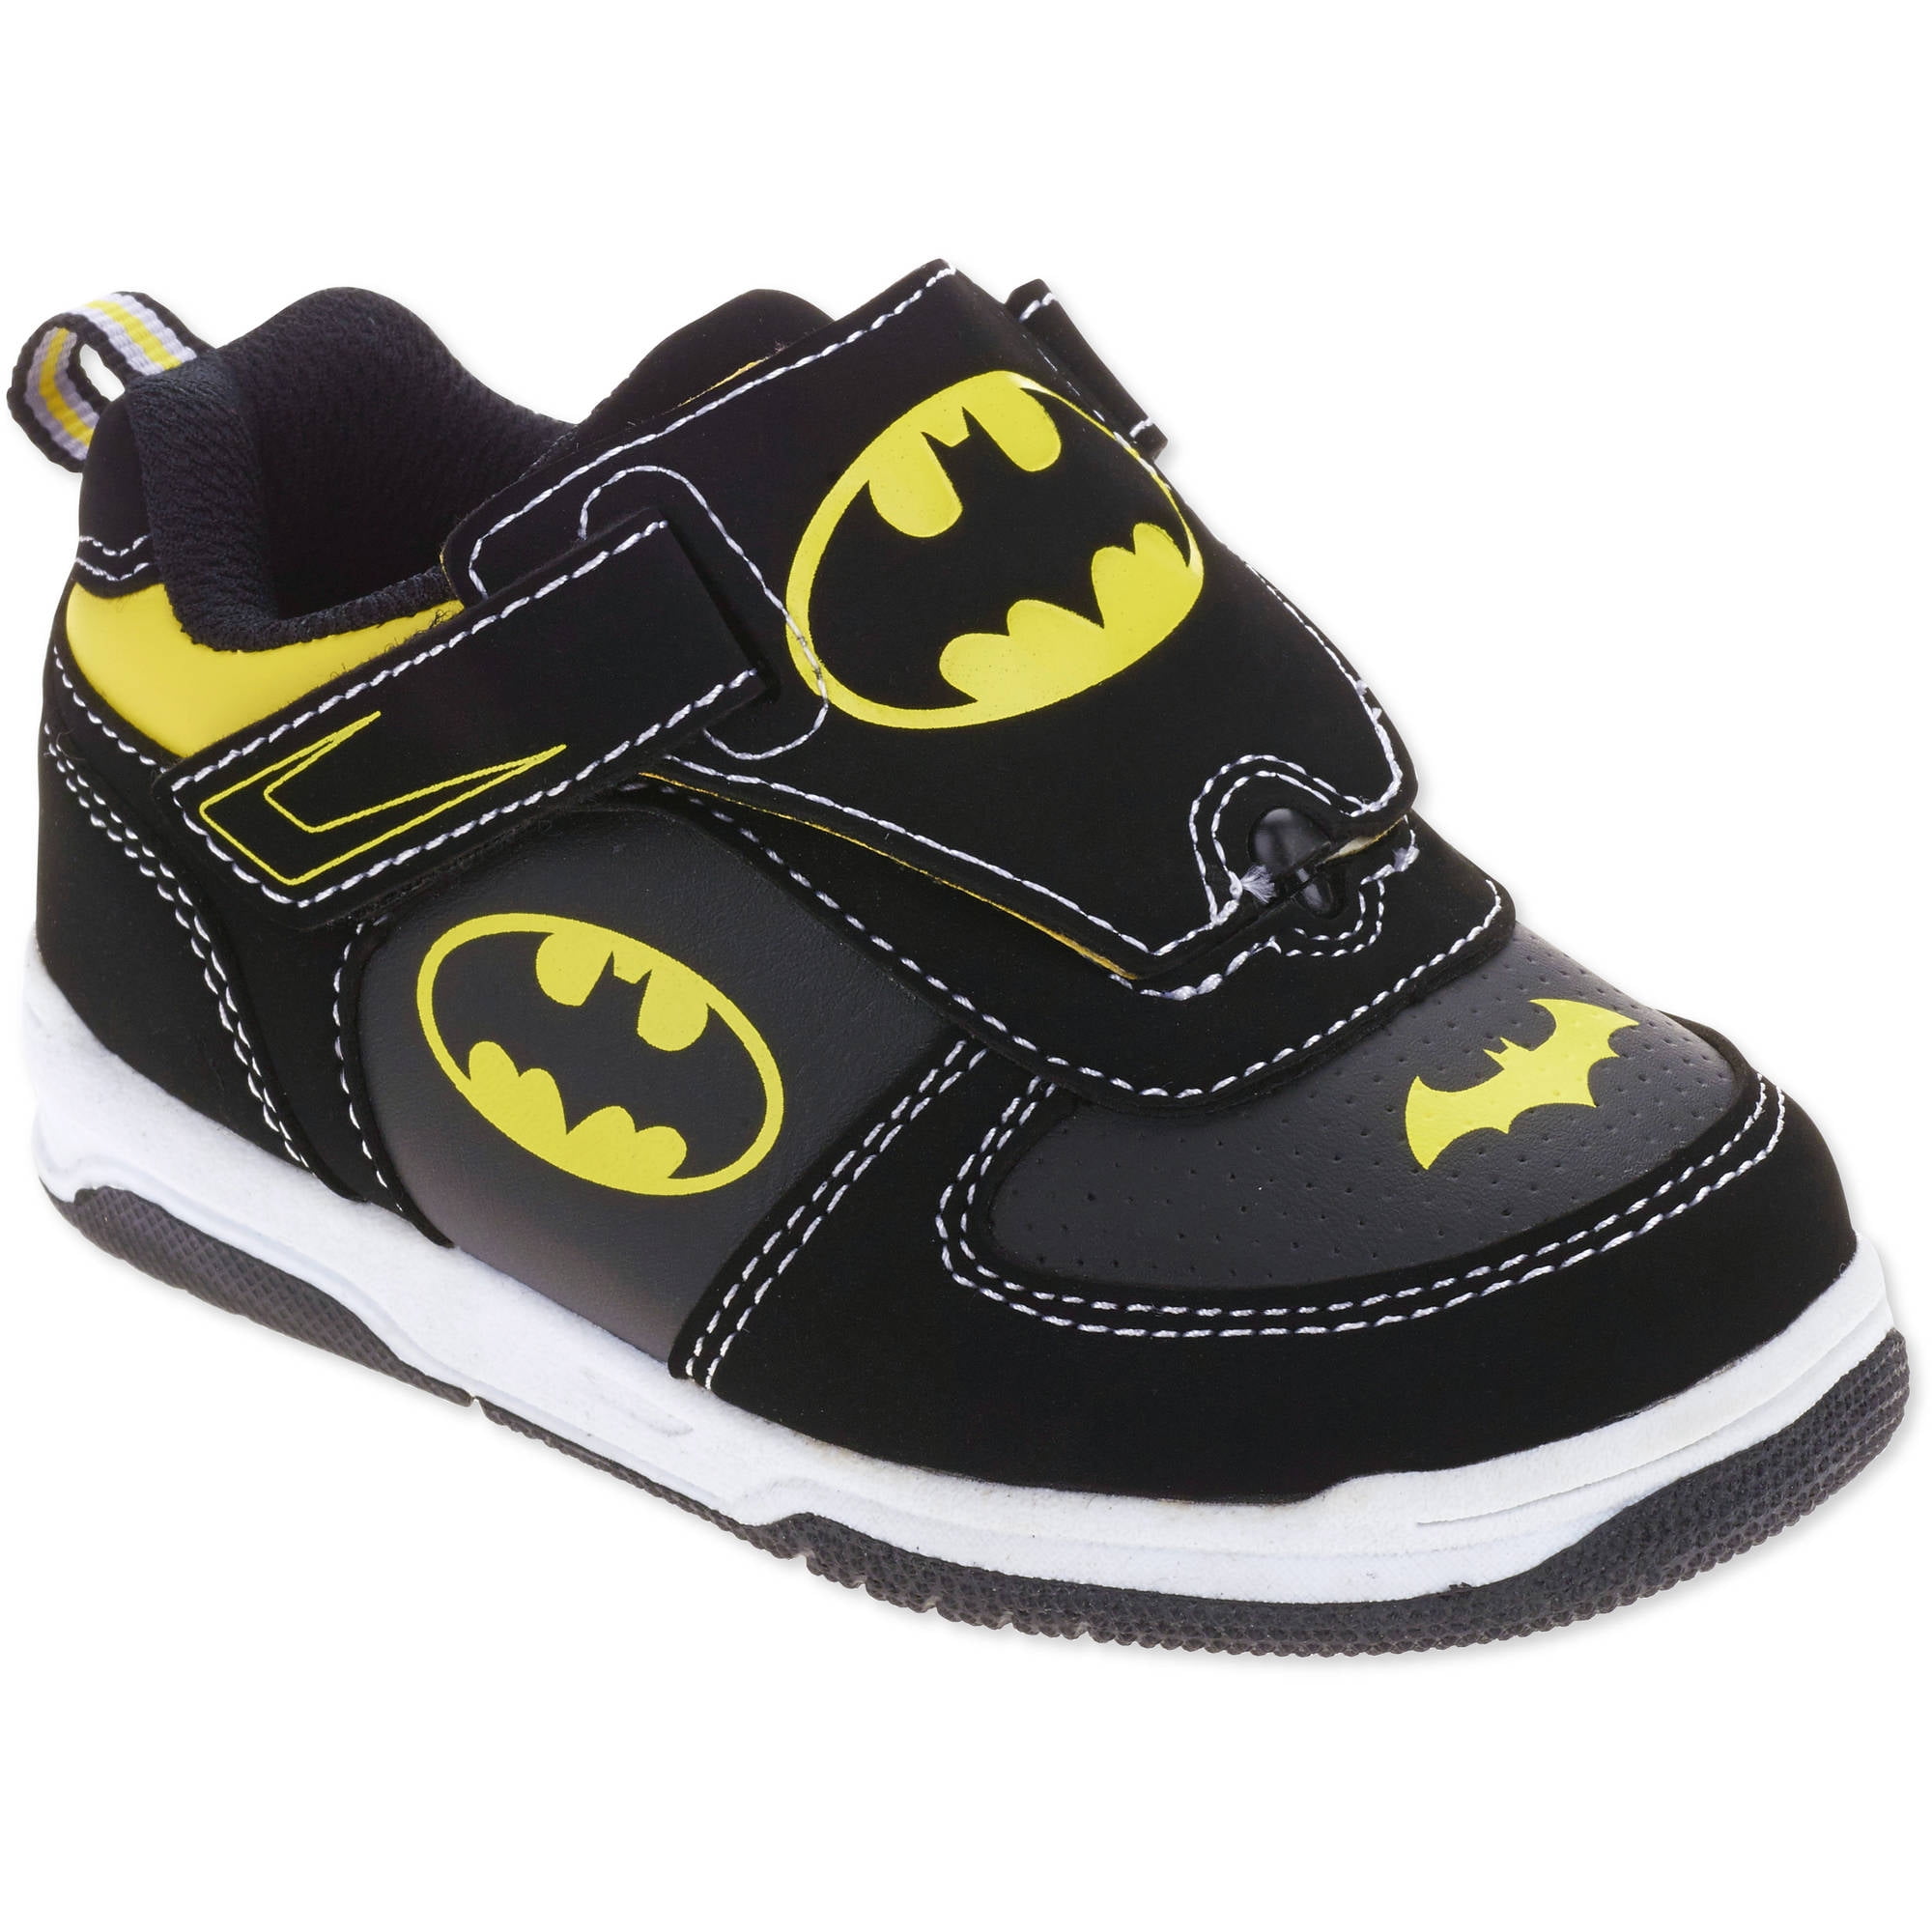 batman light up shoes walmart, OFF 74%,Buy!